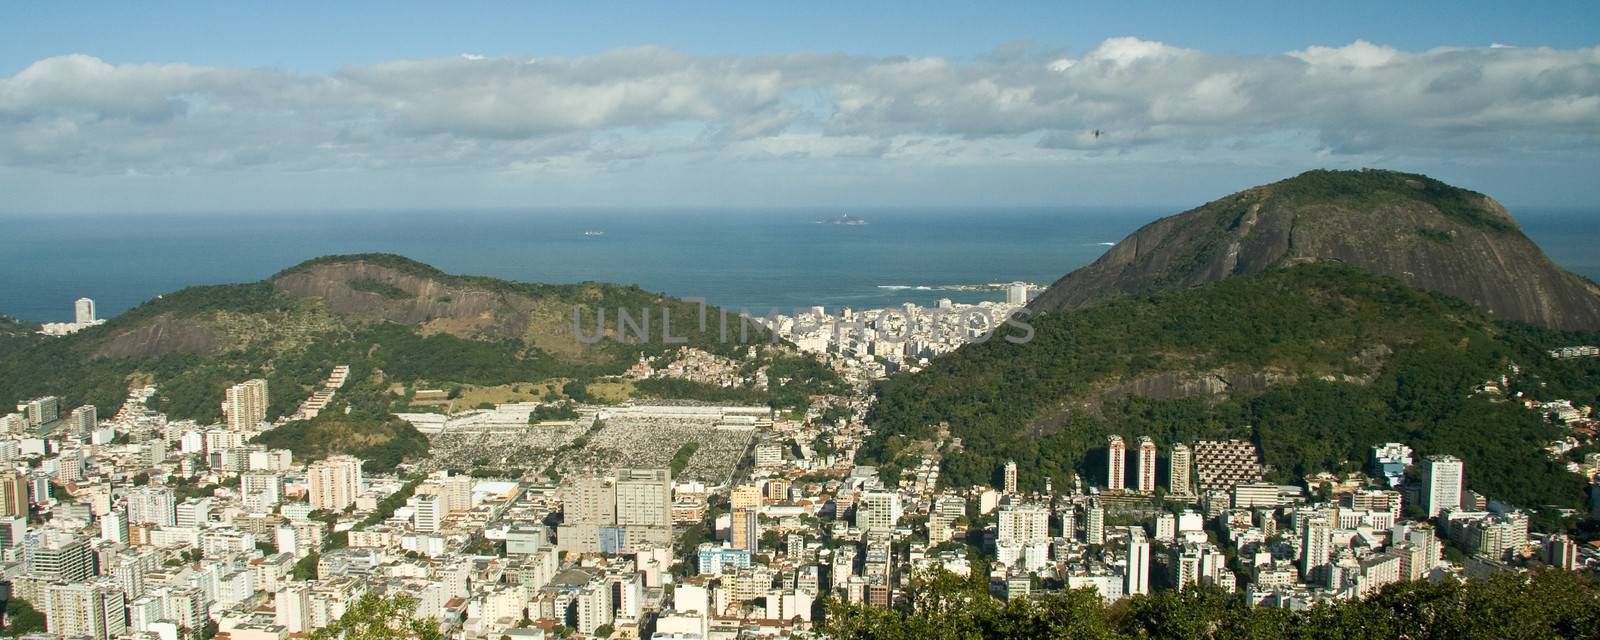 High angle view of Rio De Janeiro's unique landscape, Brazil